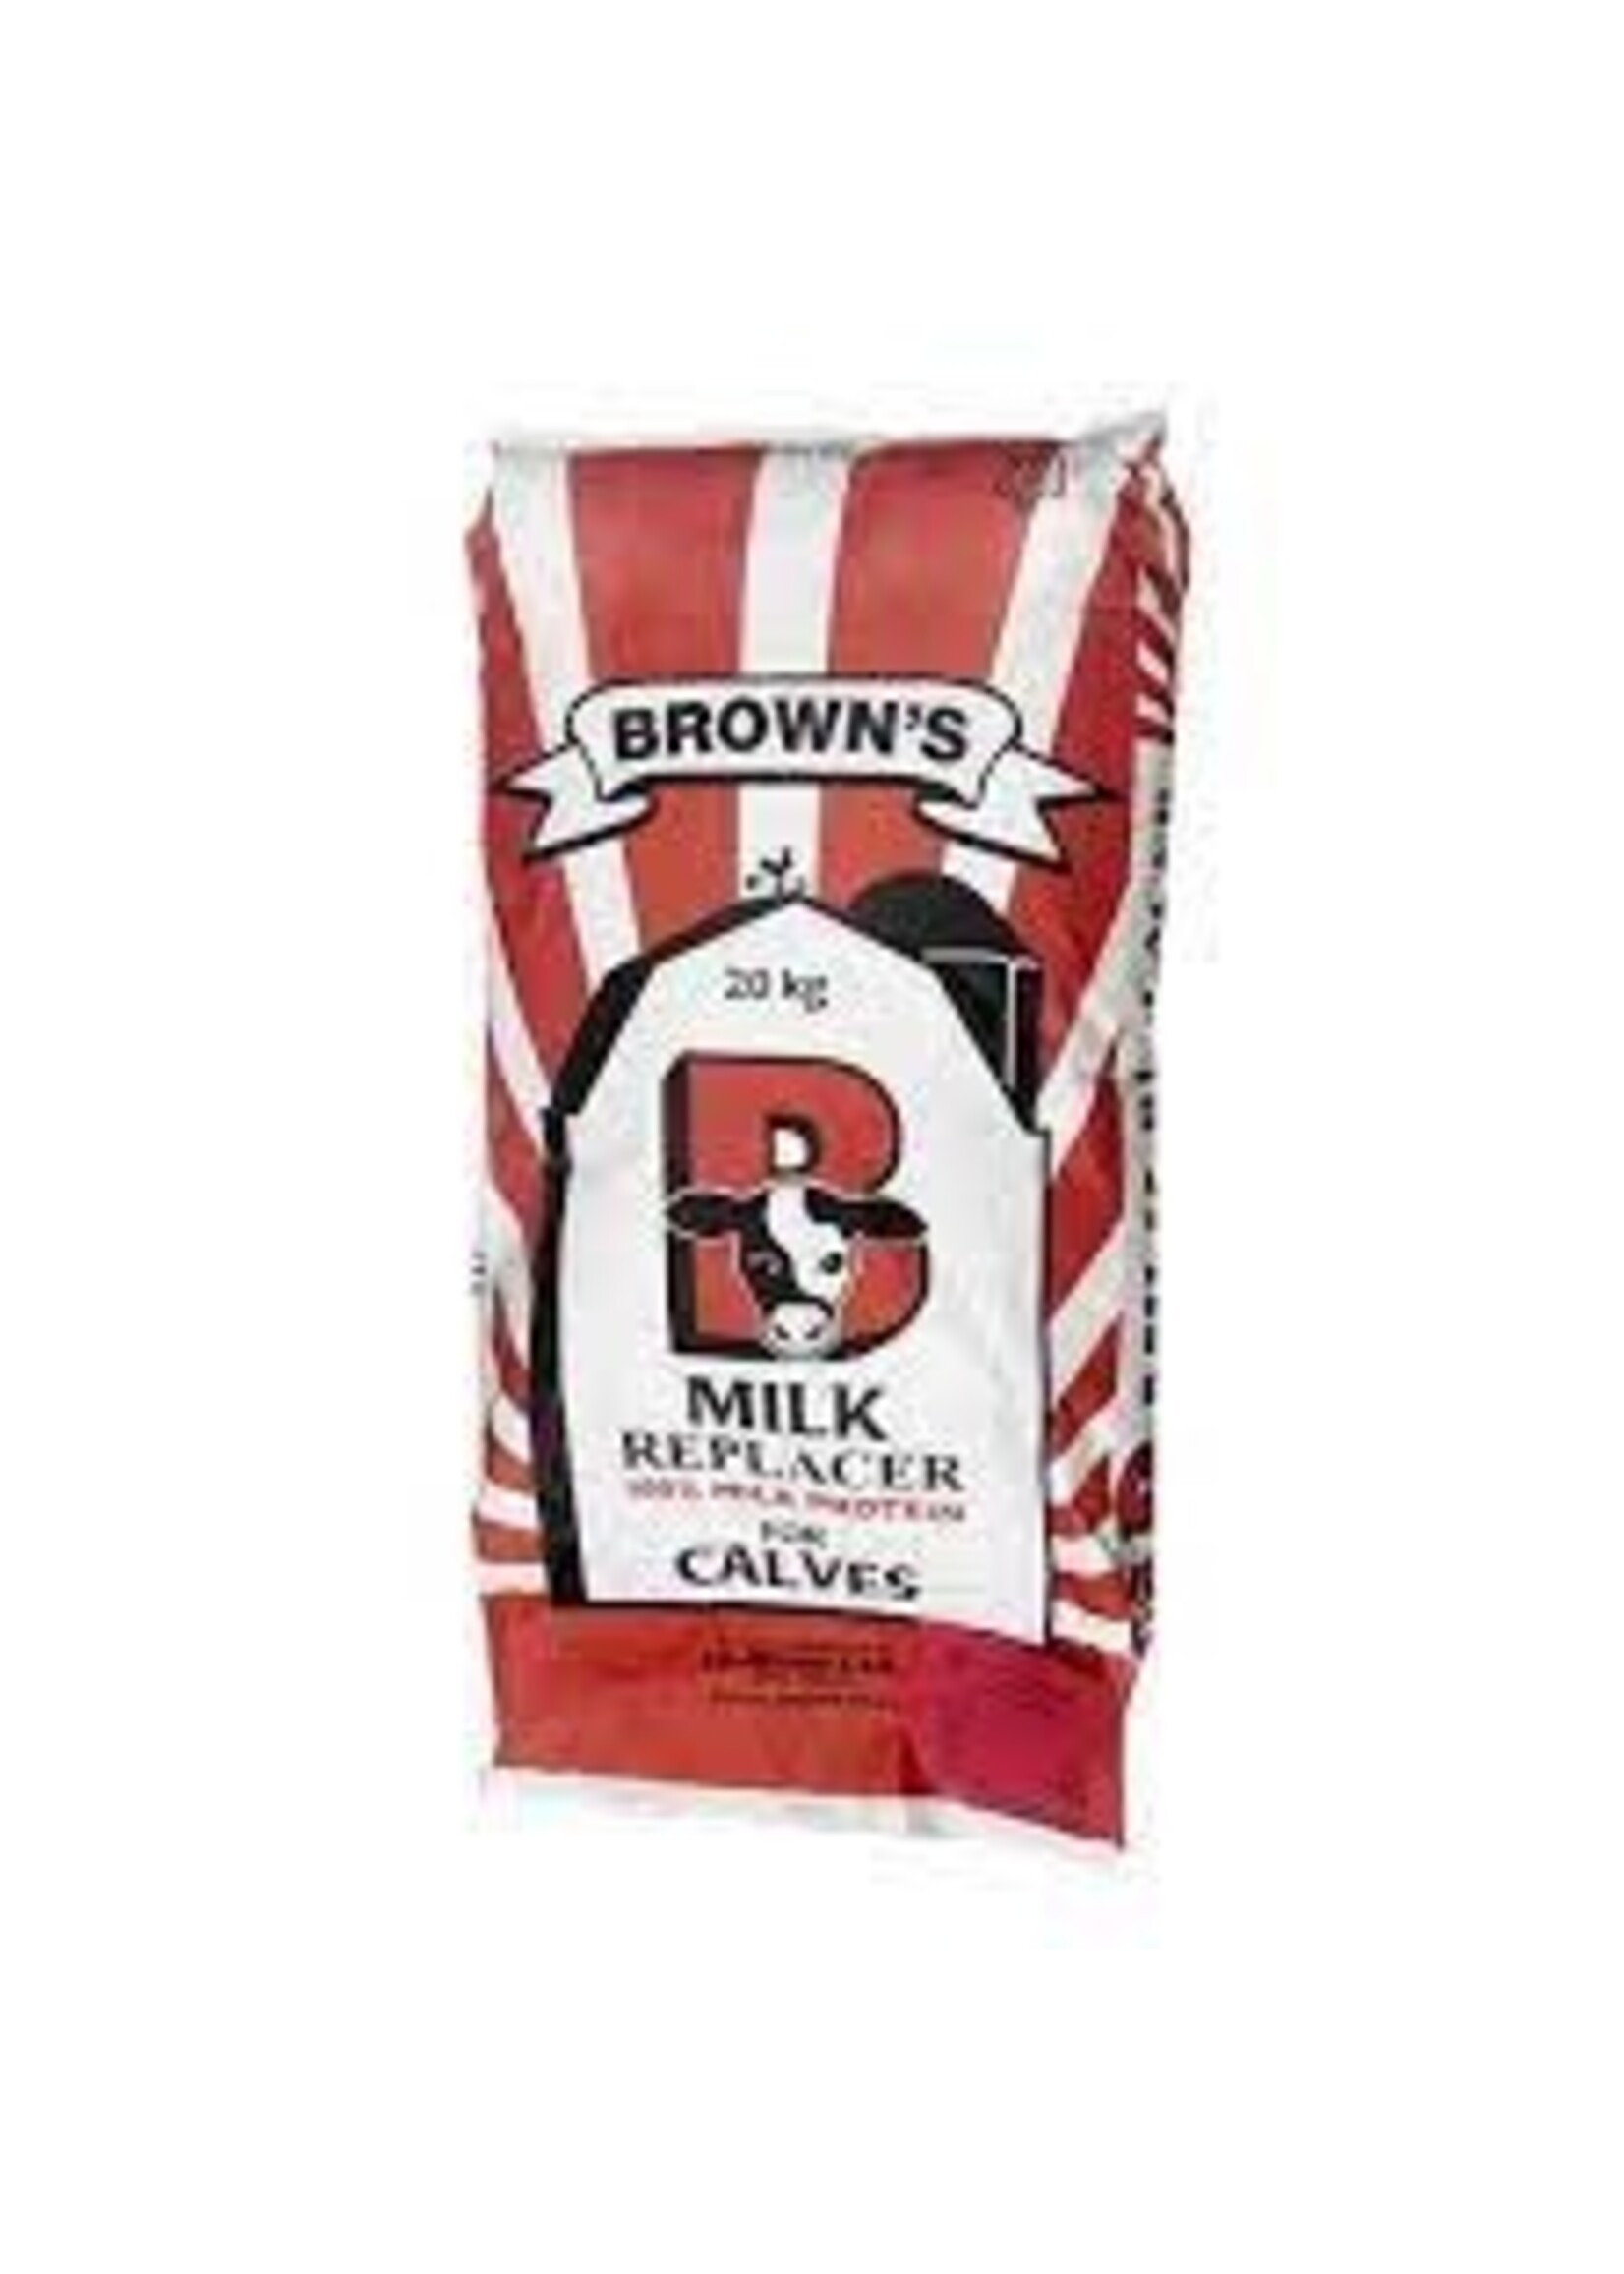 Browns Browns Milk Replacer -  Starter -